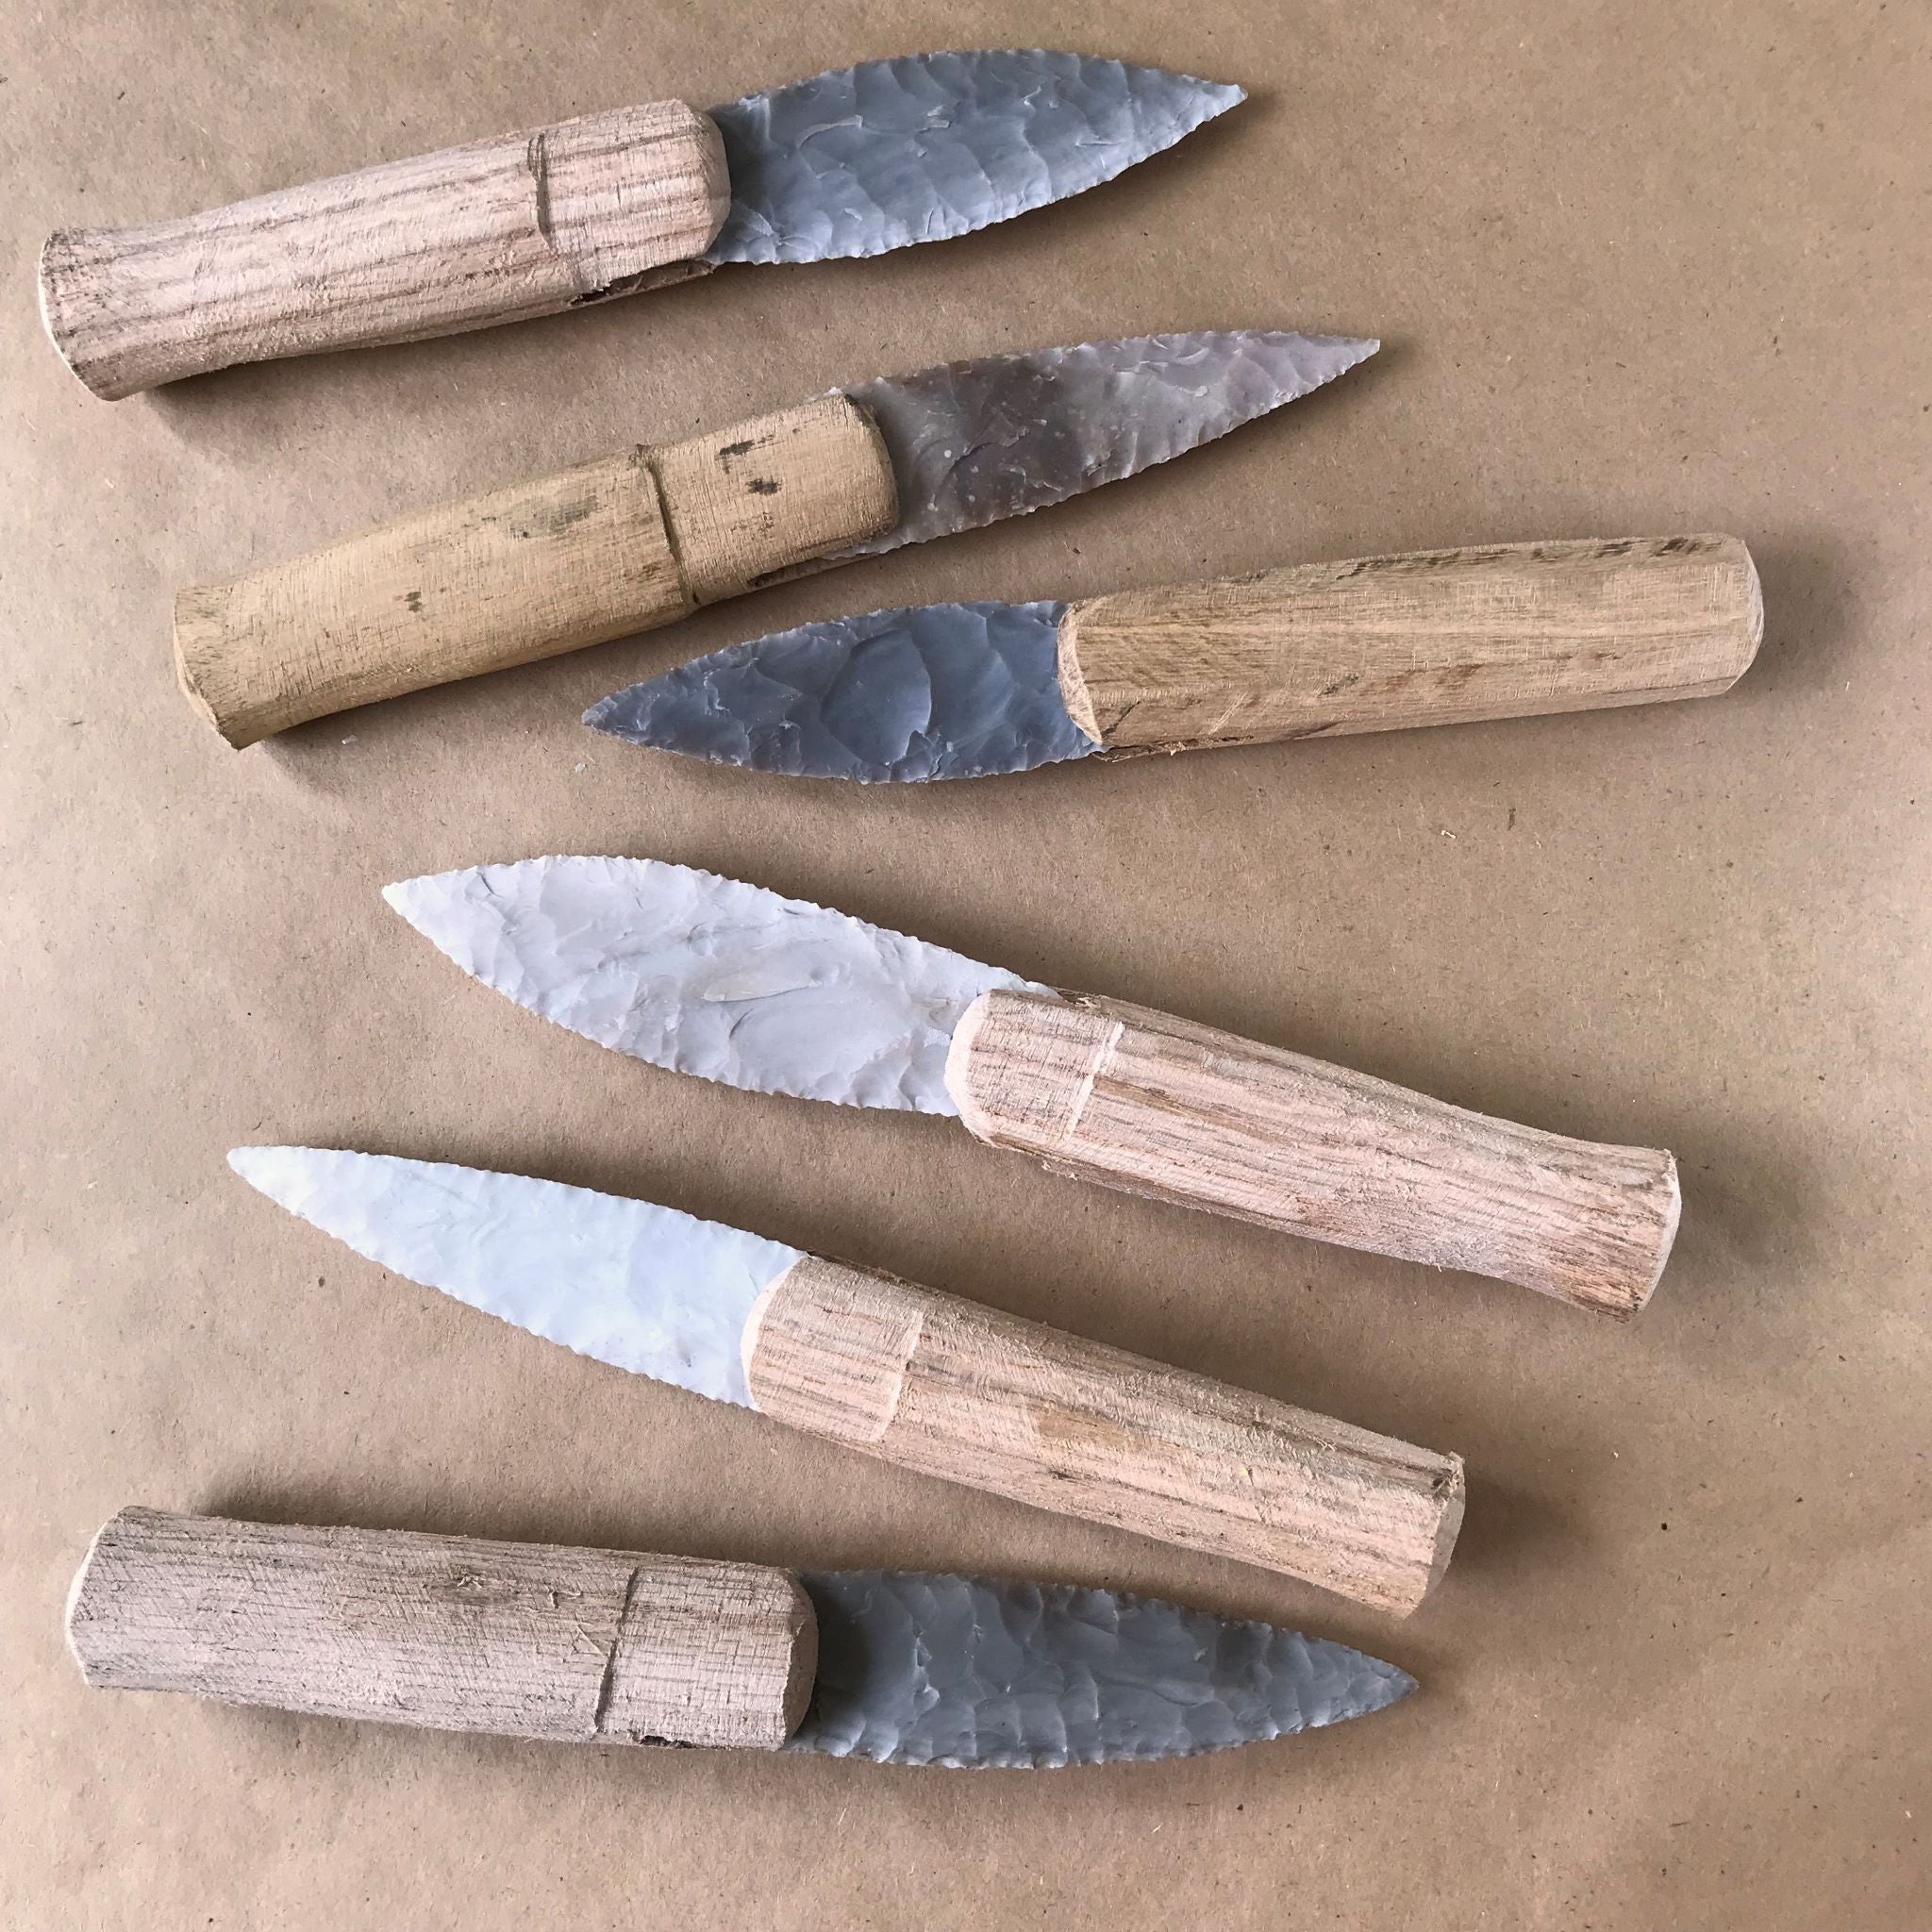 Knife kits